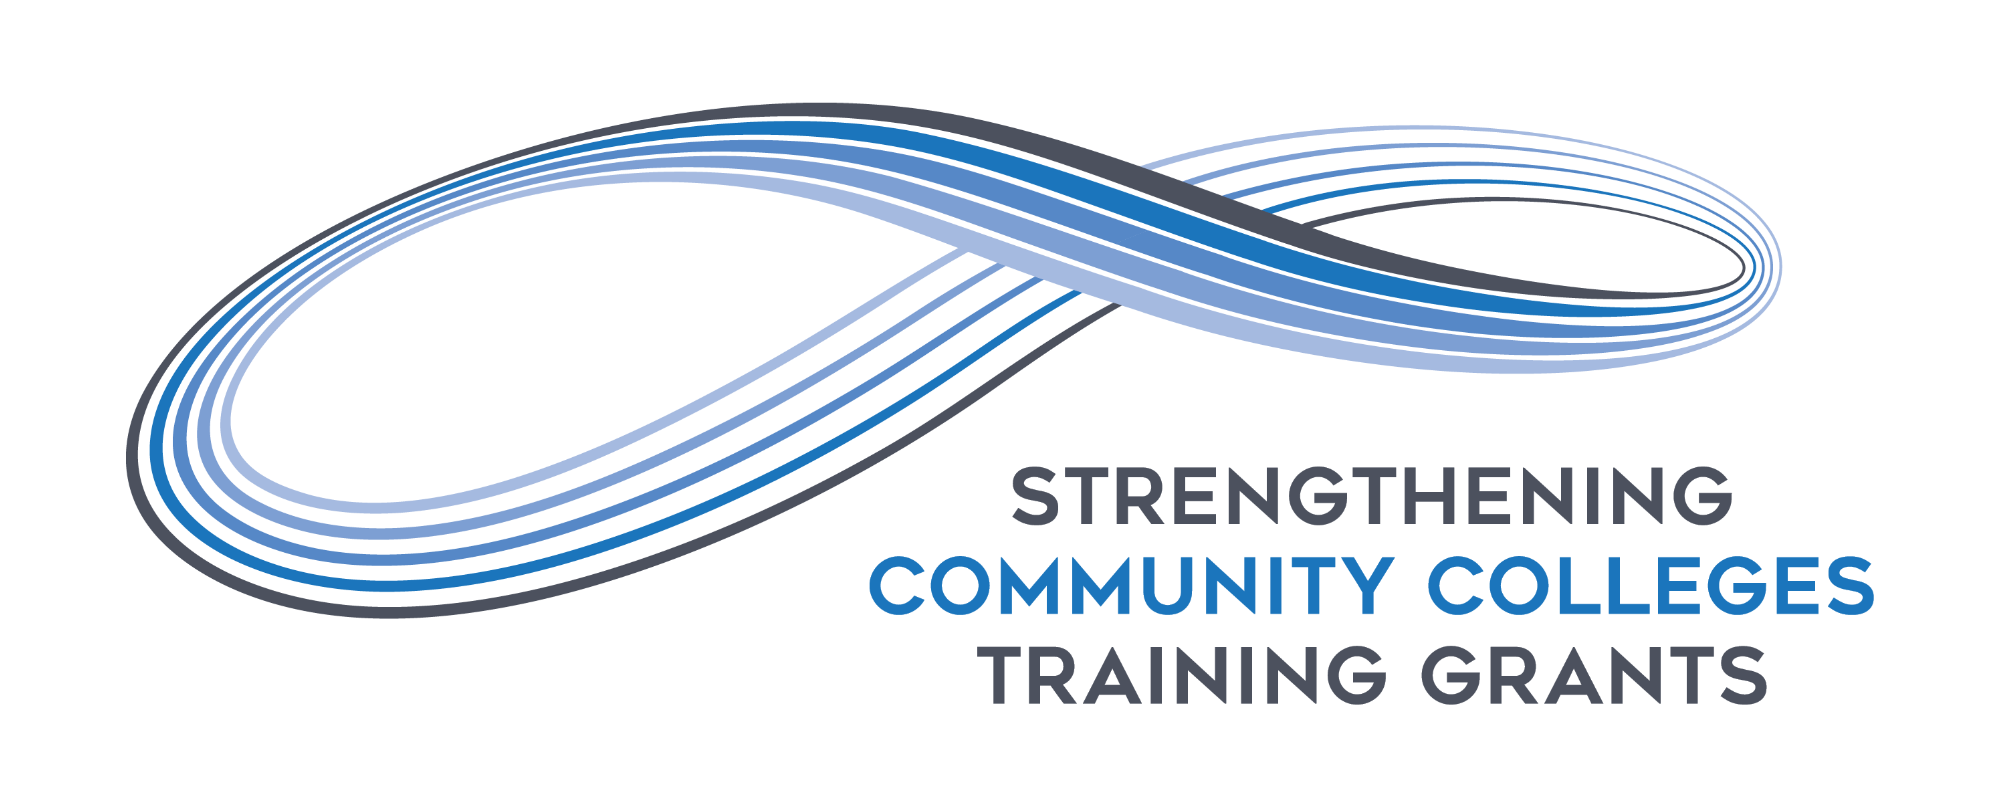 strengthening community colleges training grants logo